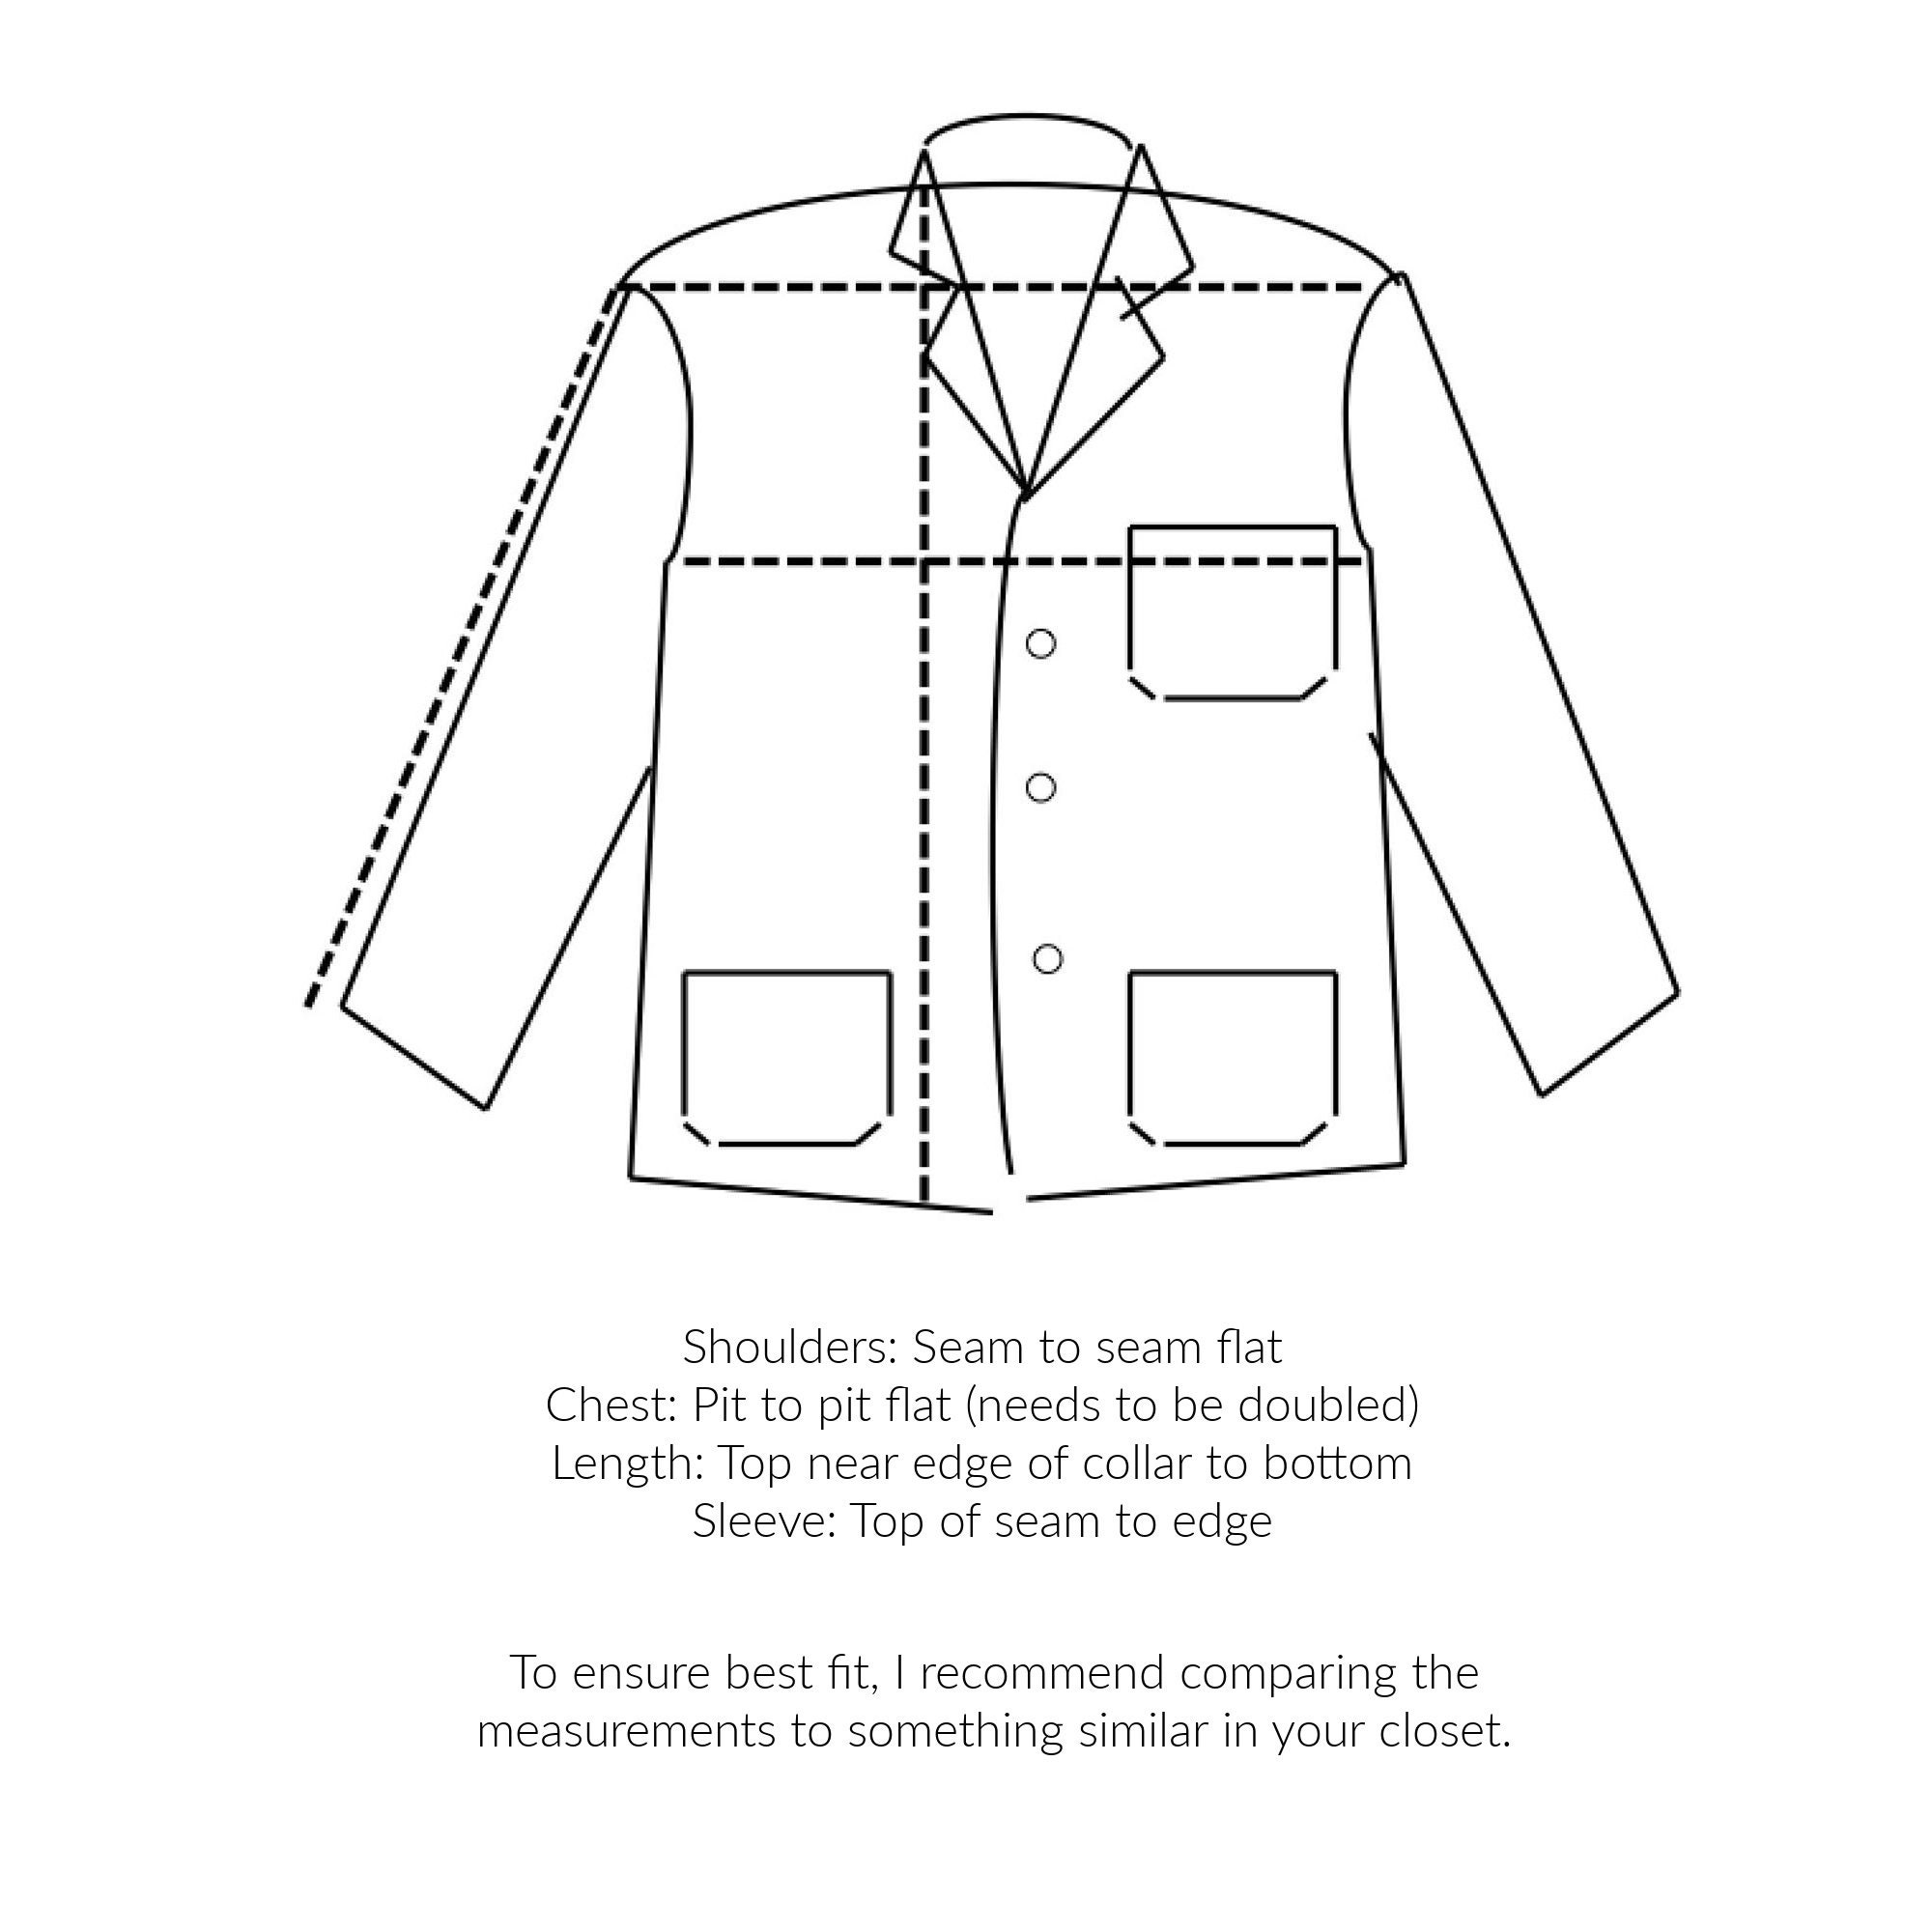 RAWSONSTUDIO Vintage Brick Red Shop Coat | Unisex Herringbone Twill Euro Chore Trench Jacket | M 